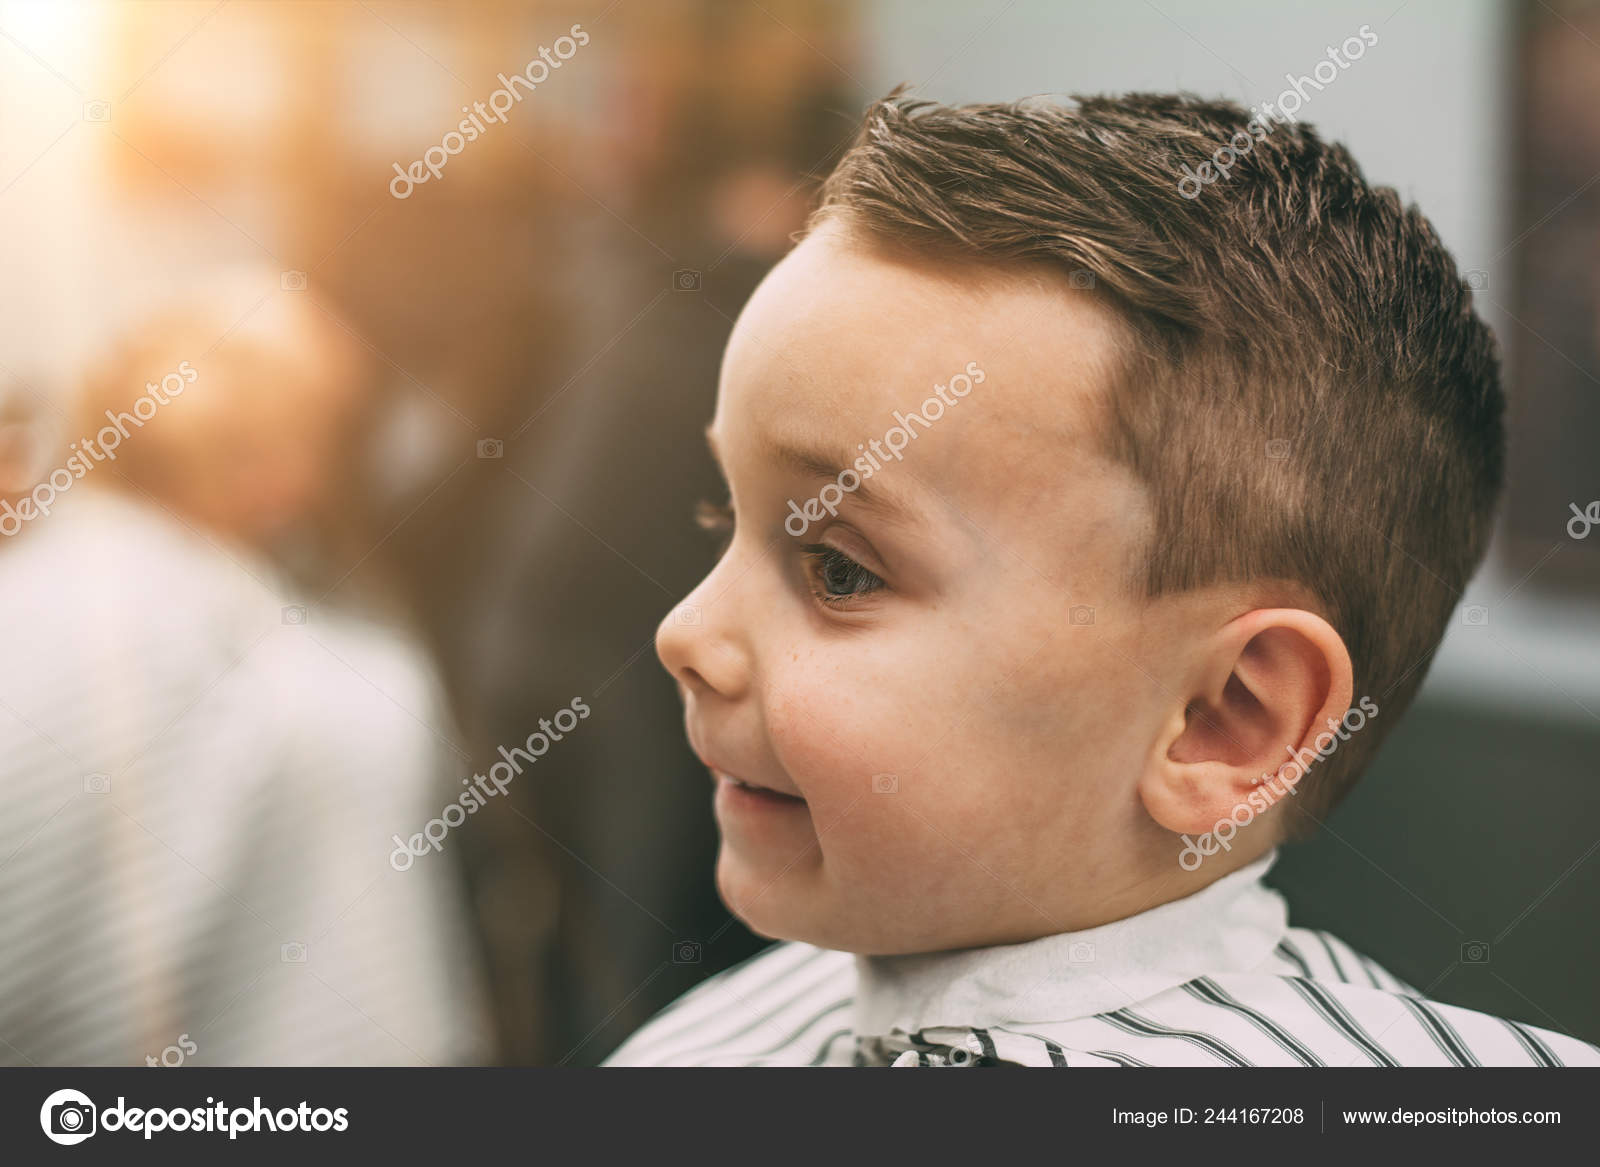 Little boy faces stock illustration. Illustration of ethnicity - 47004296